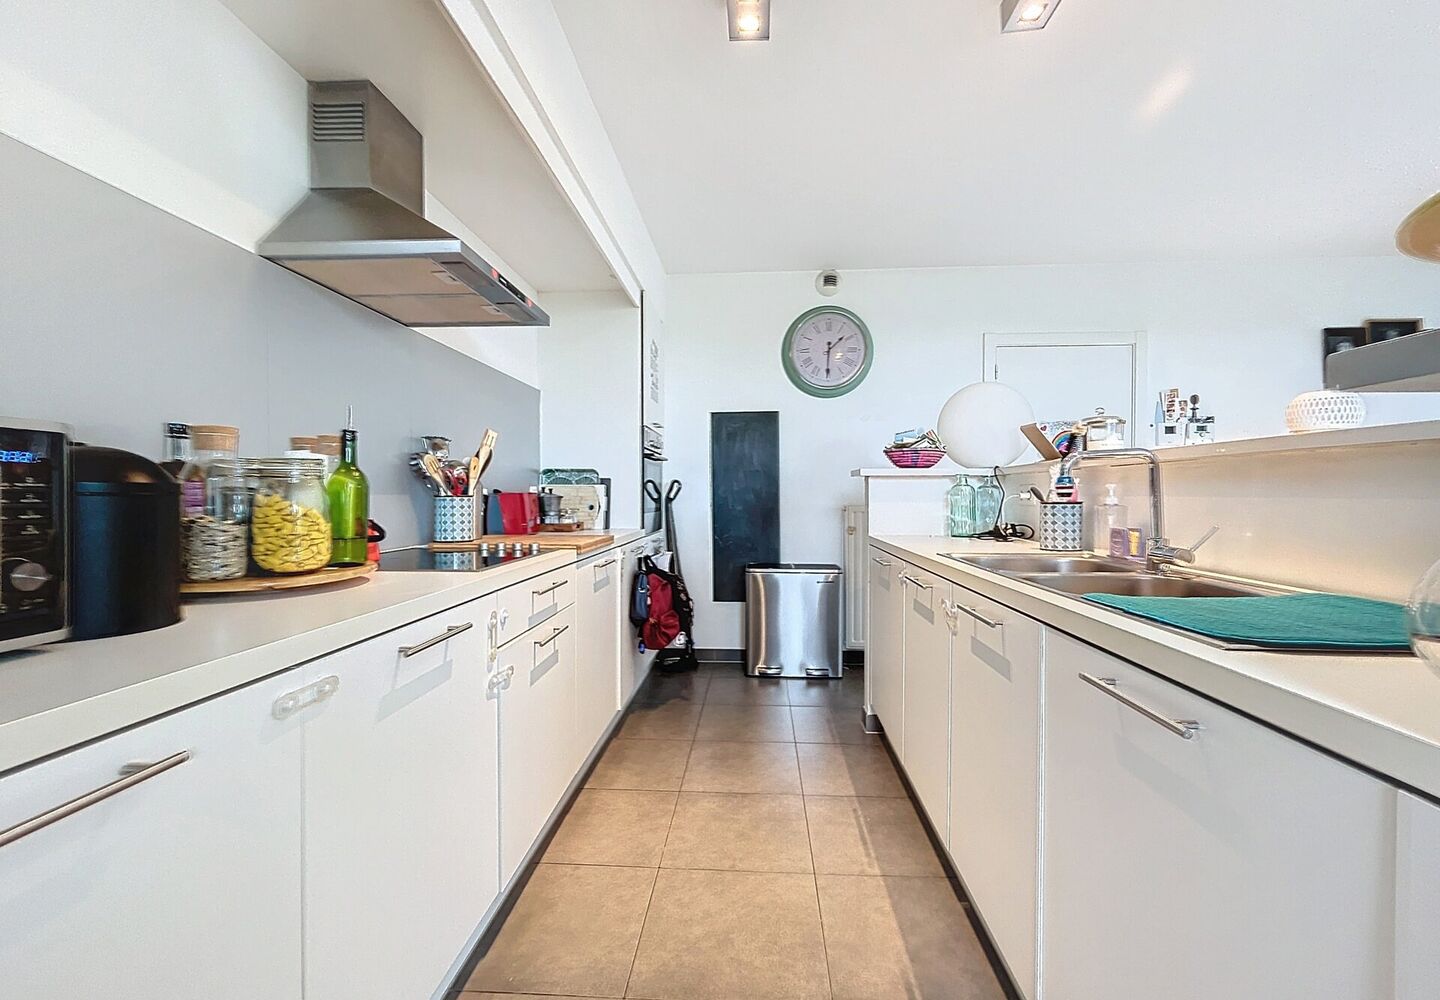 Flat for rent in Sint-Agata-Berchem